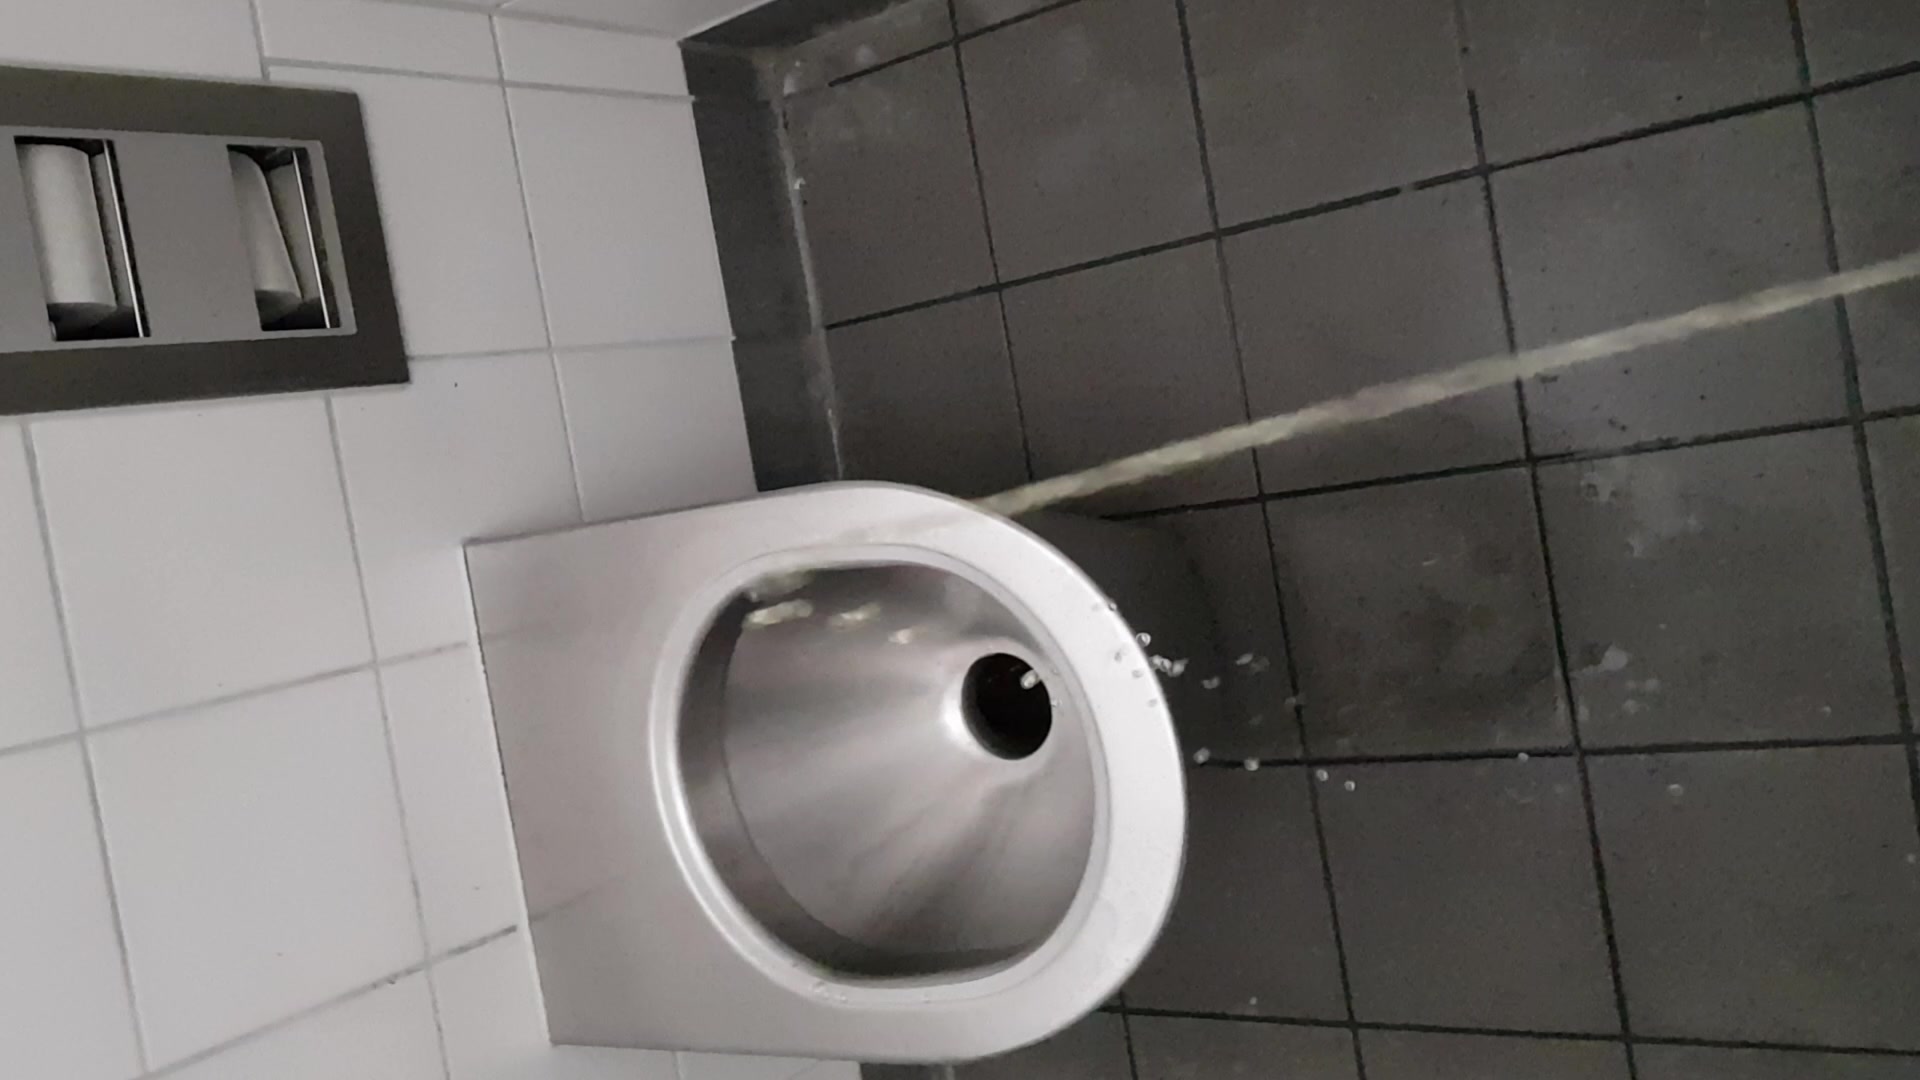 Pissing in Public Toilet